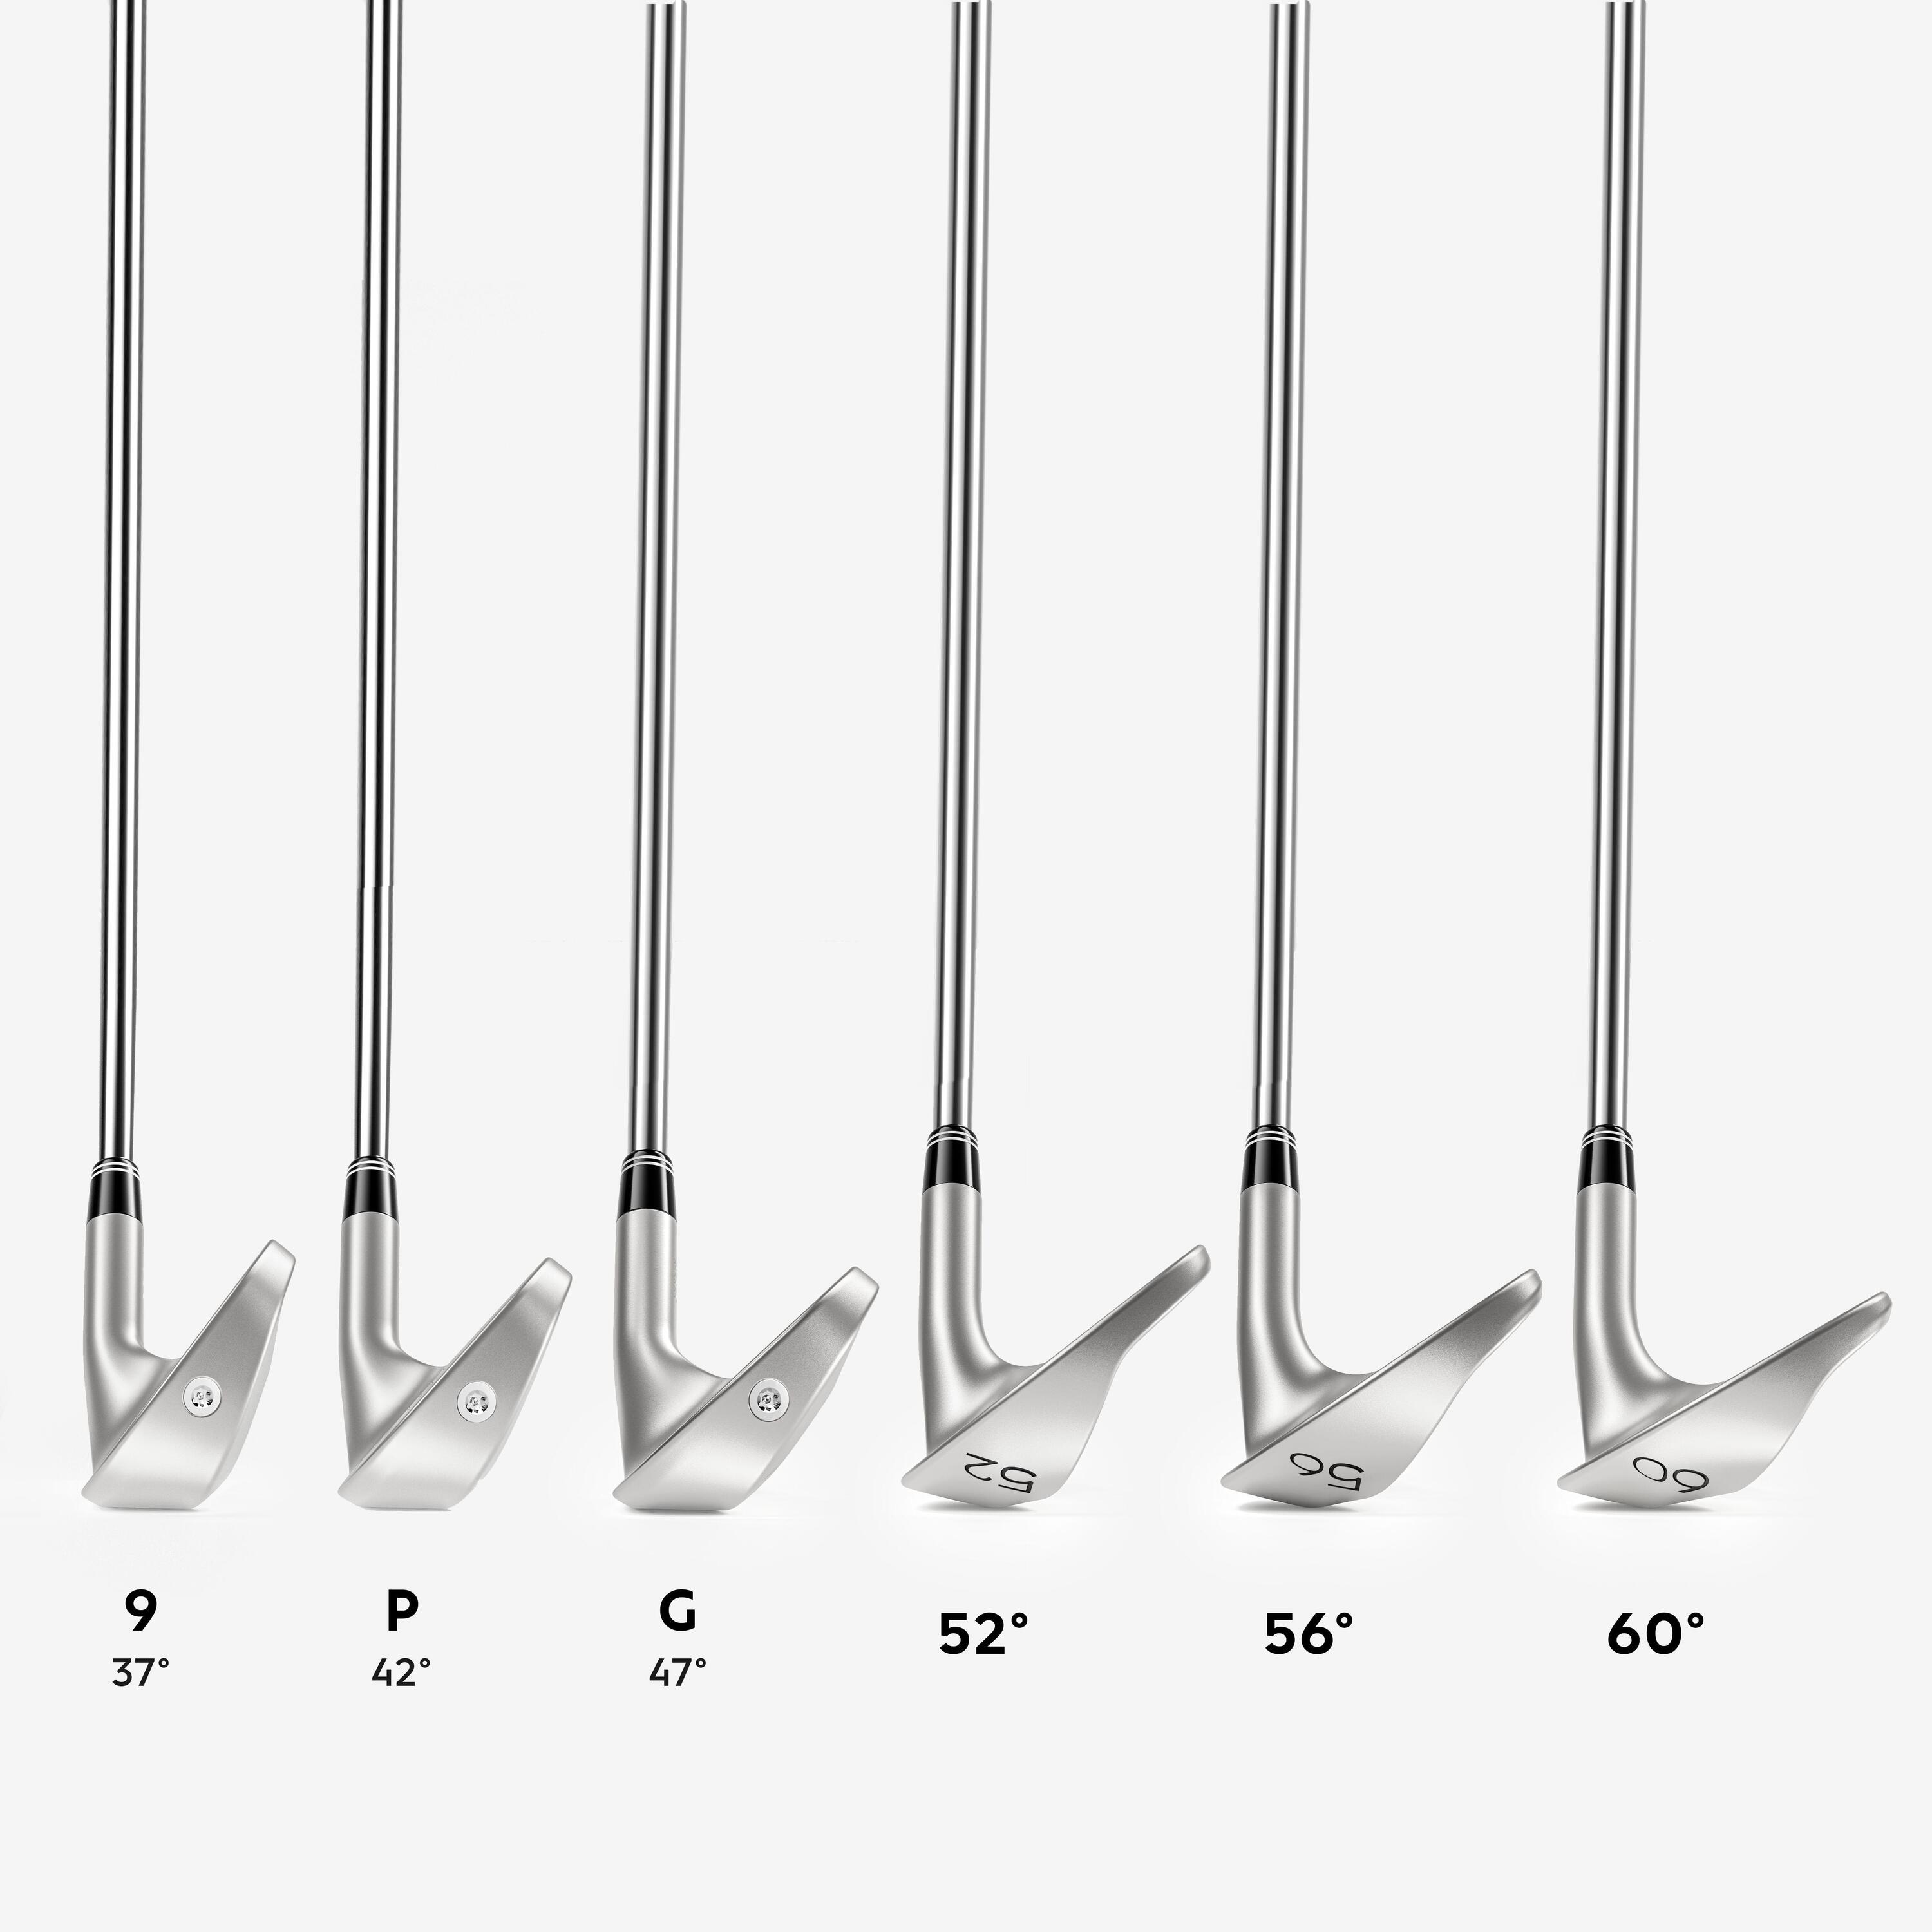 Golf wedge left handed size 2 steel - INESIS 500 4/8